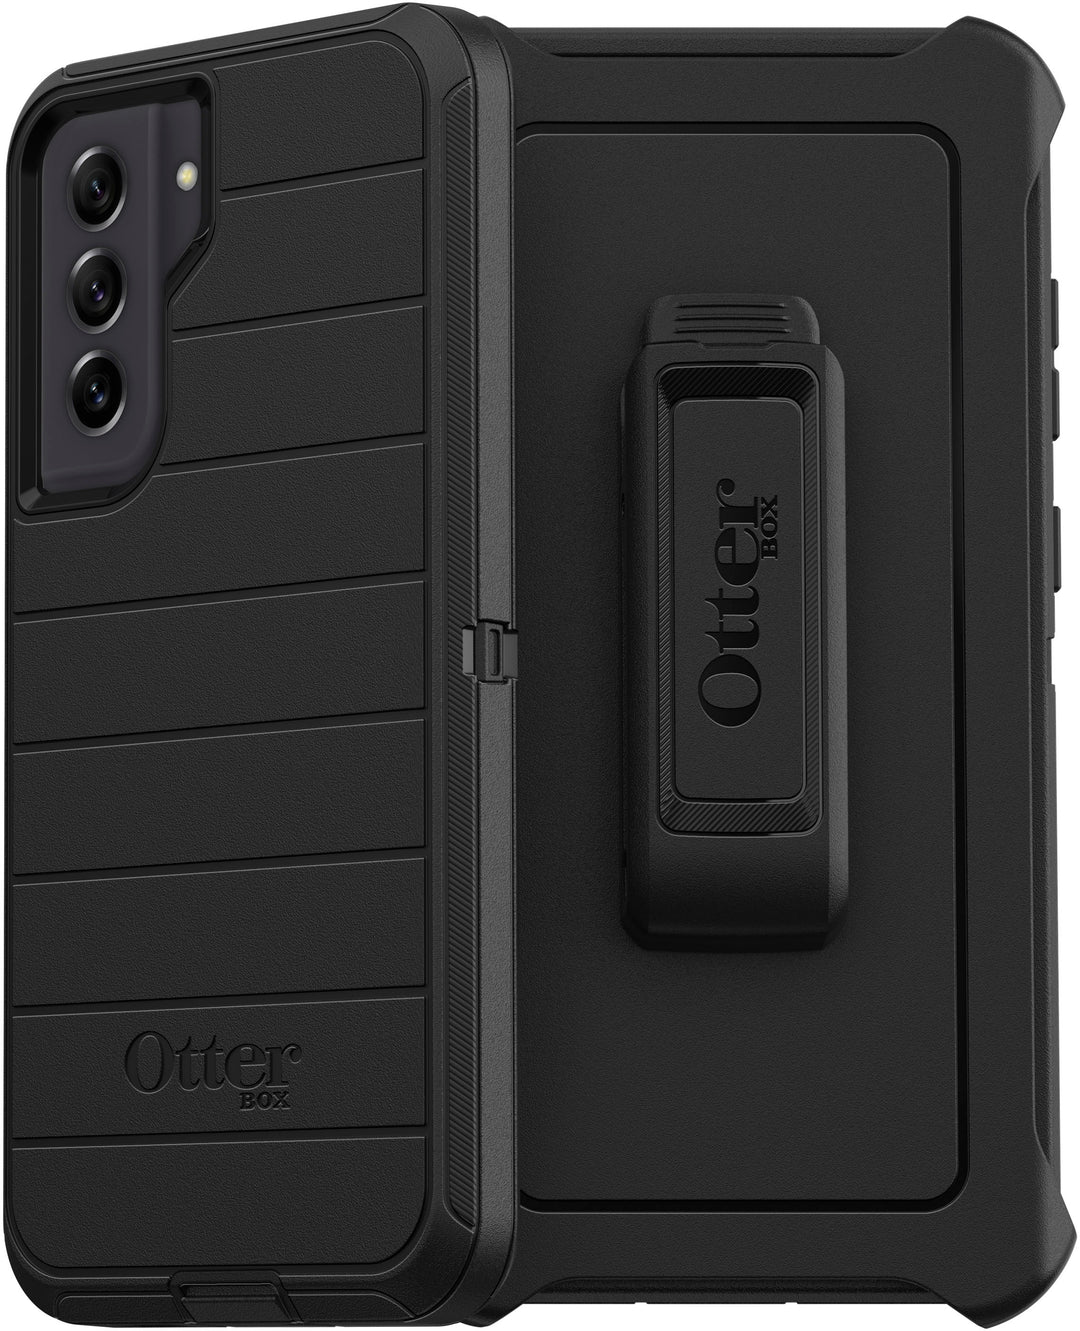 OtterBox - Defender Pro Series Hard Shell for Samsung Galaxy S21 FE 5G - Black_1